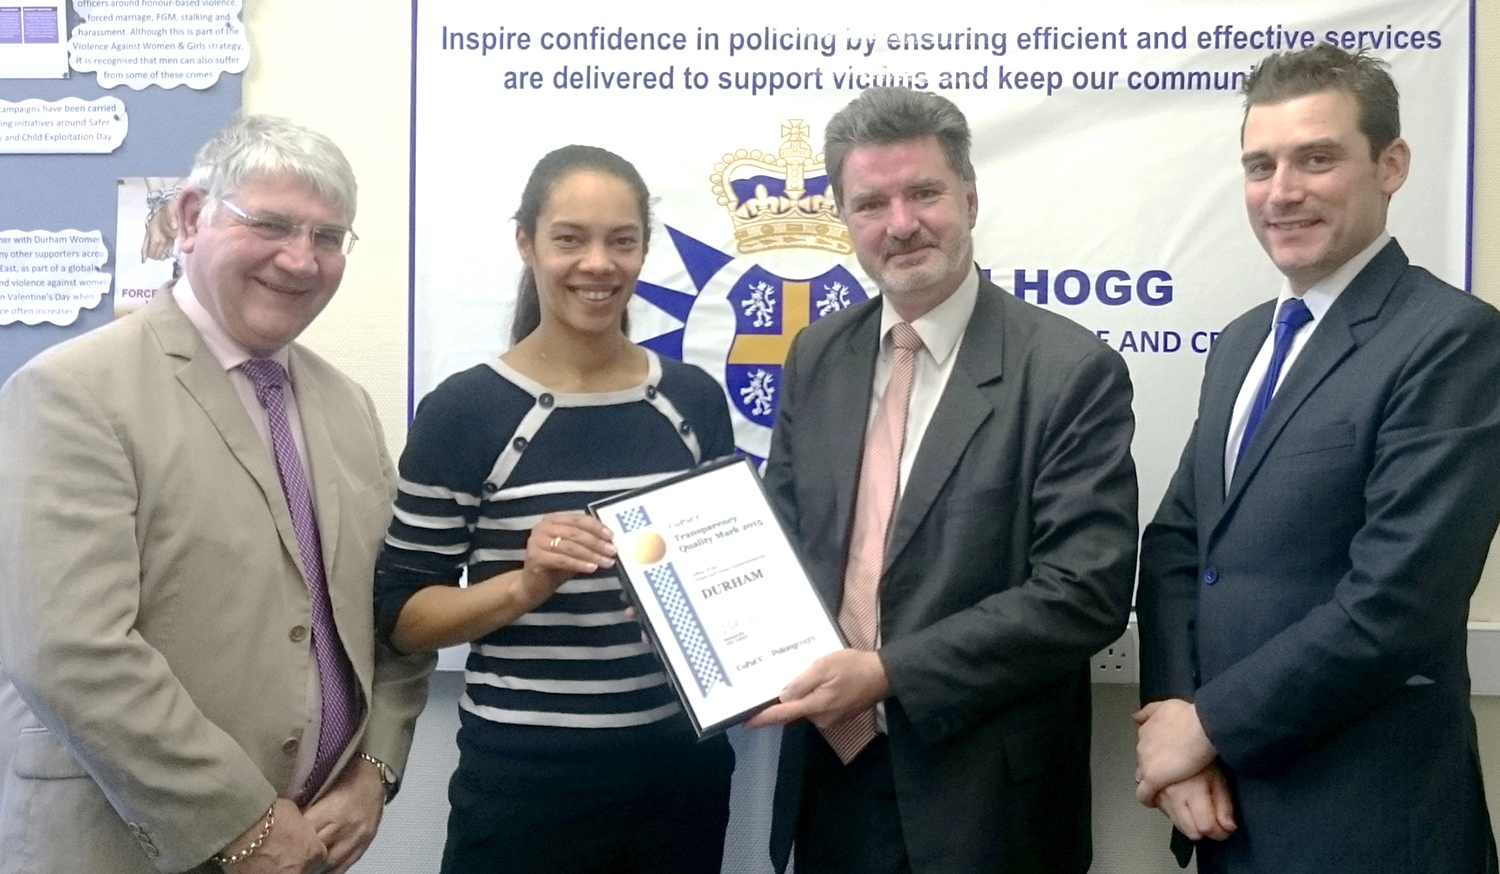 Durham PCC Awarded National Transparency Quality Mark